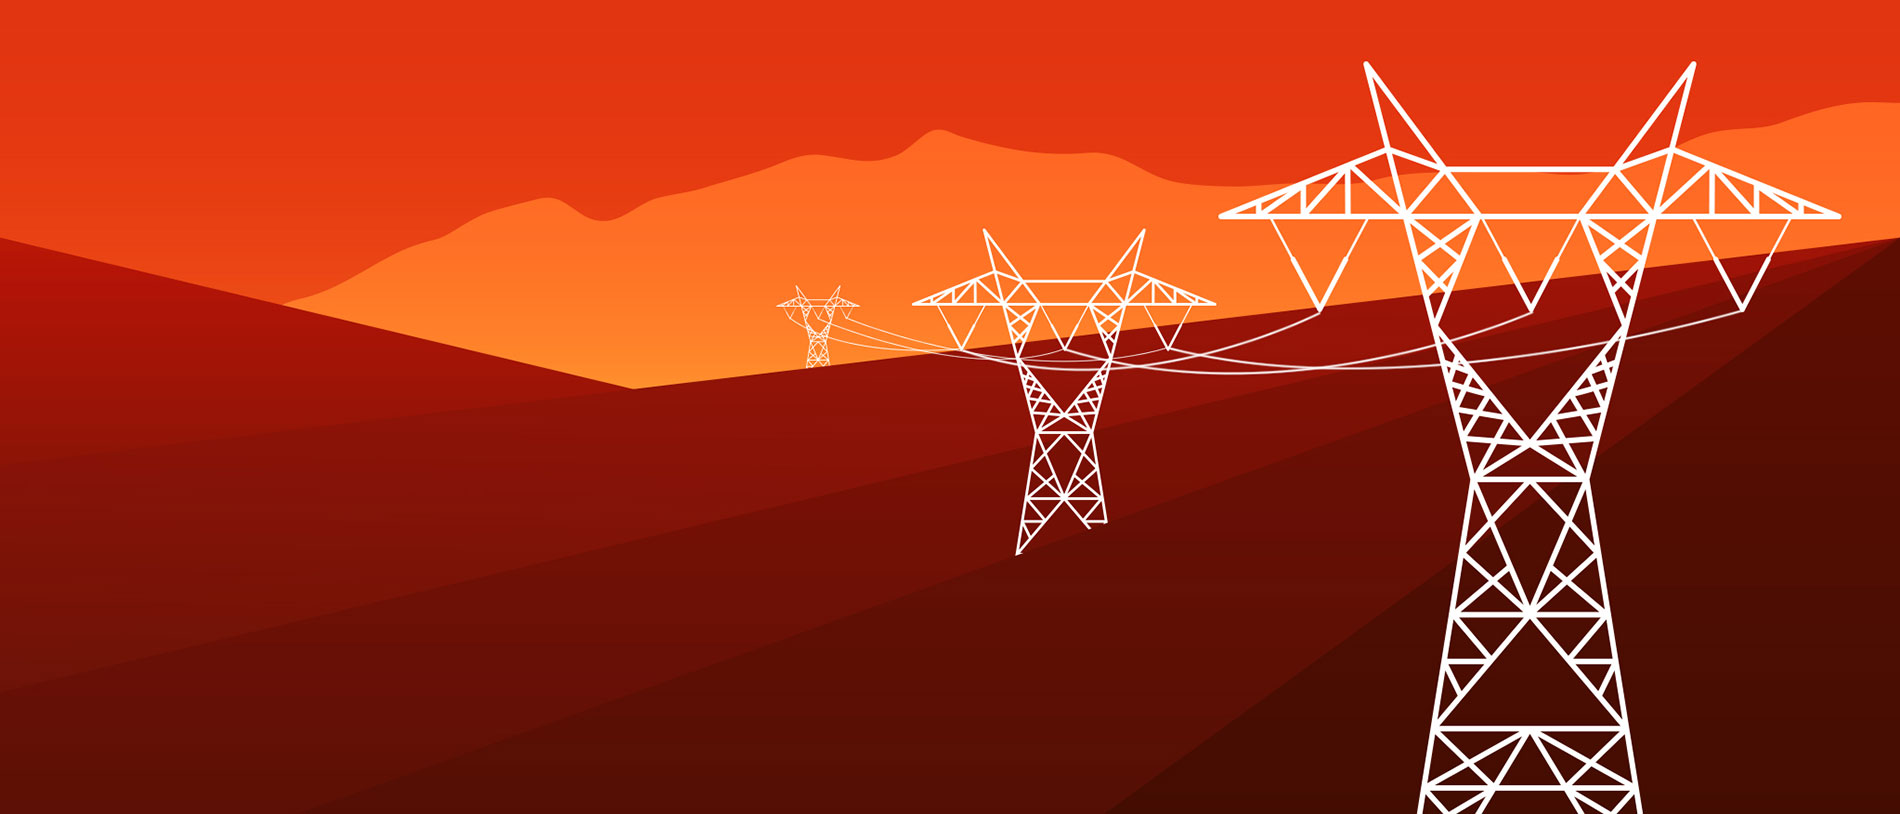 Illustration energy infrastructure